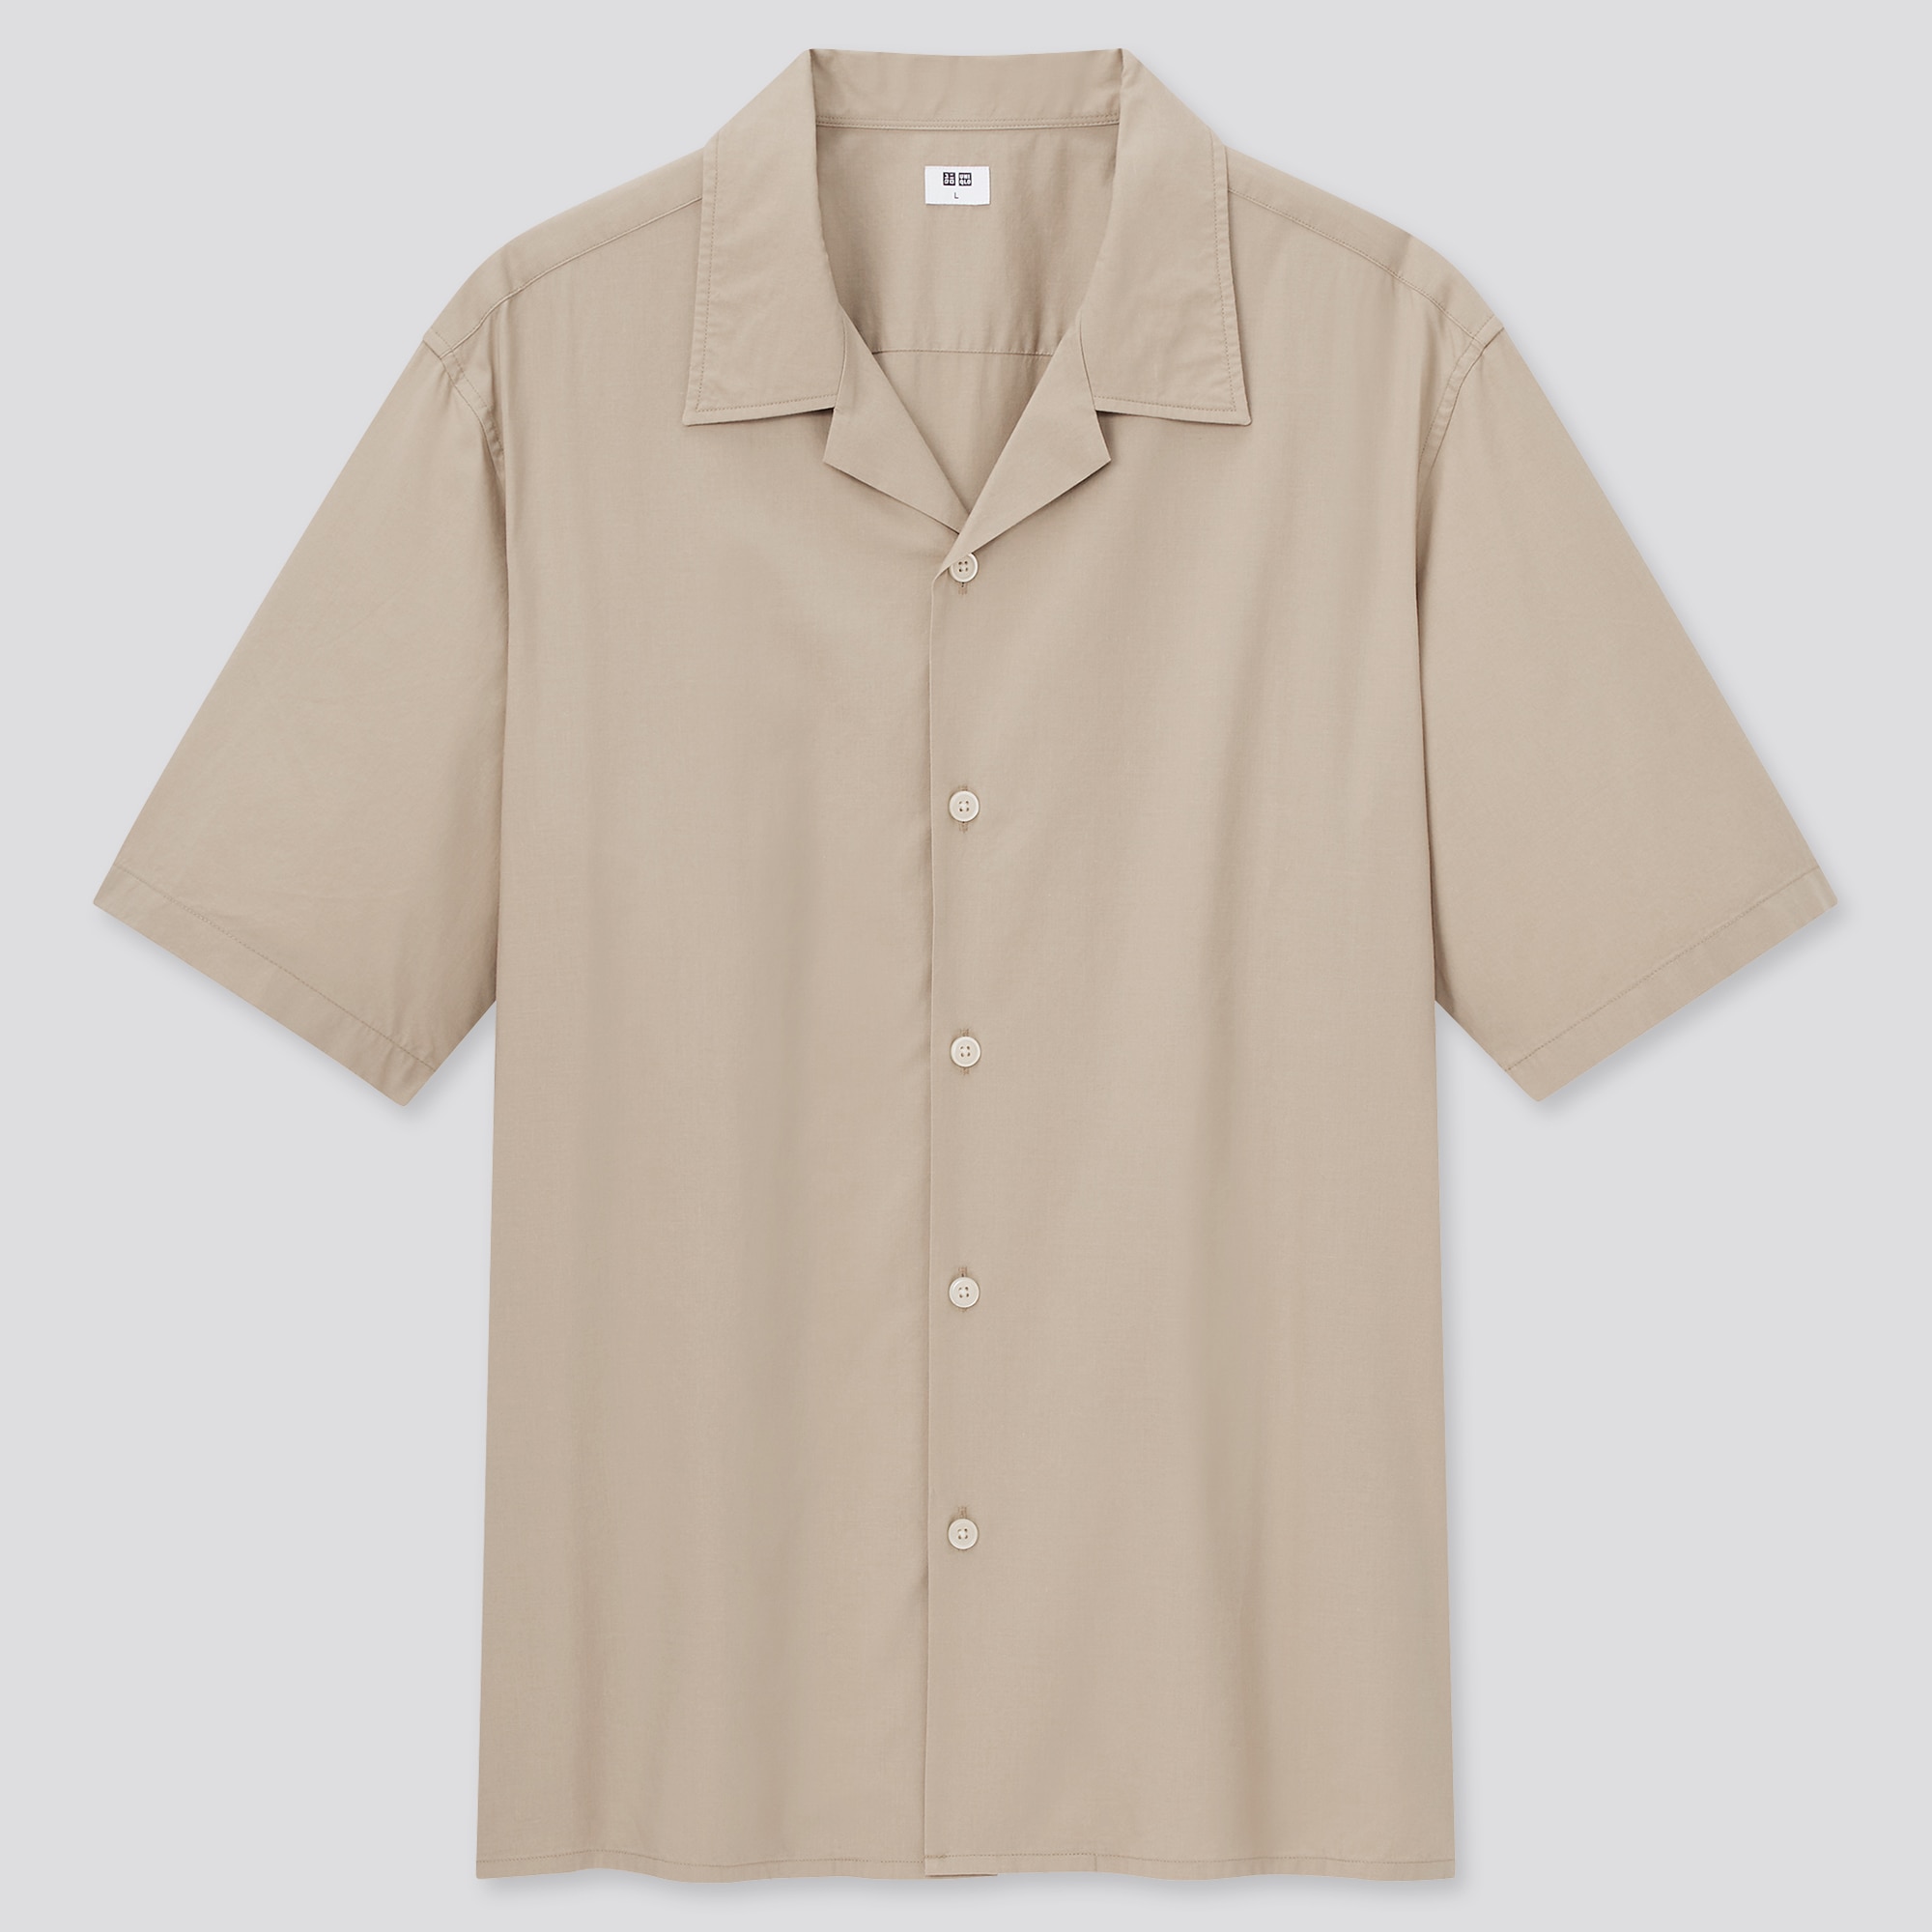 jayall - Open Collar Short-Sleeve Shirt Outfit | StyleHint